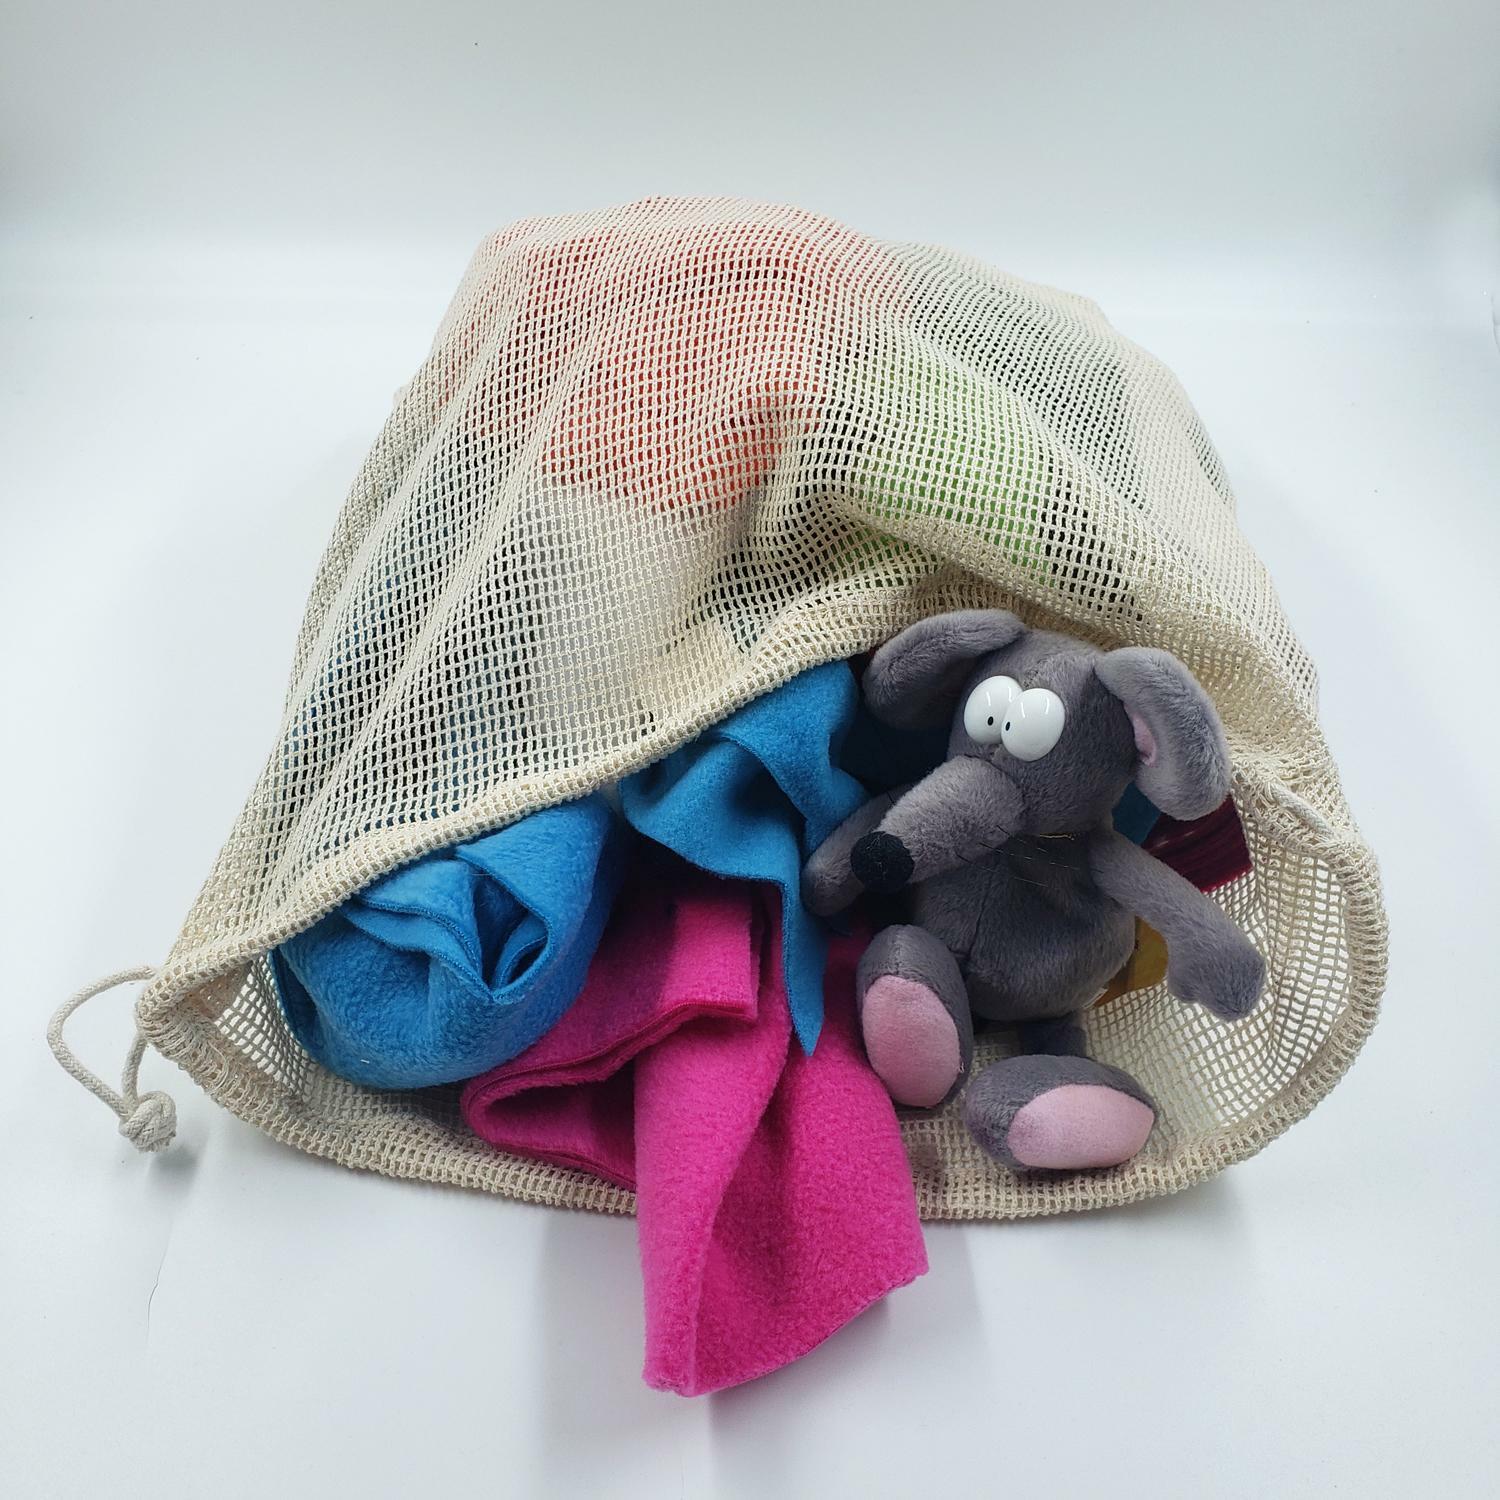 net washing bag,laundry,remnants,rat hammocks